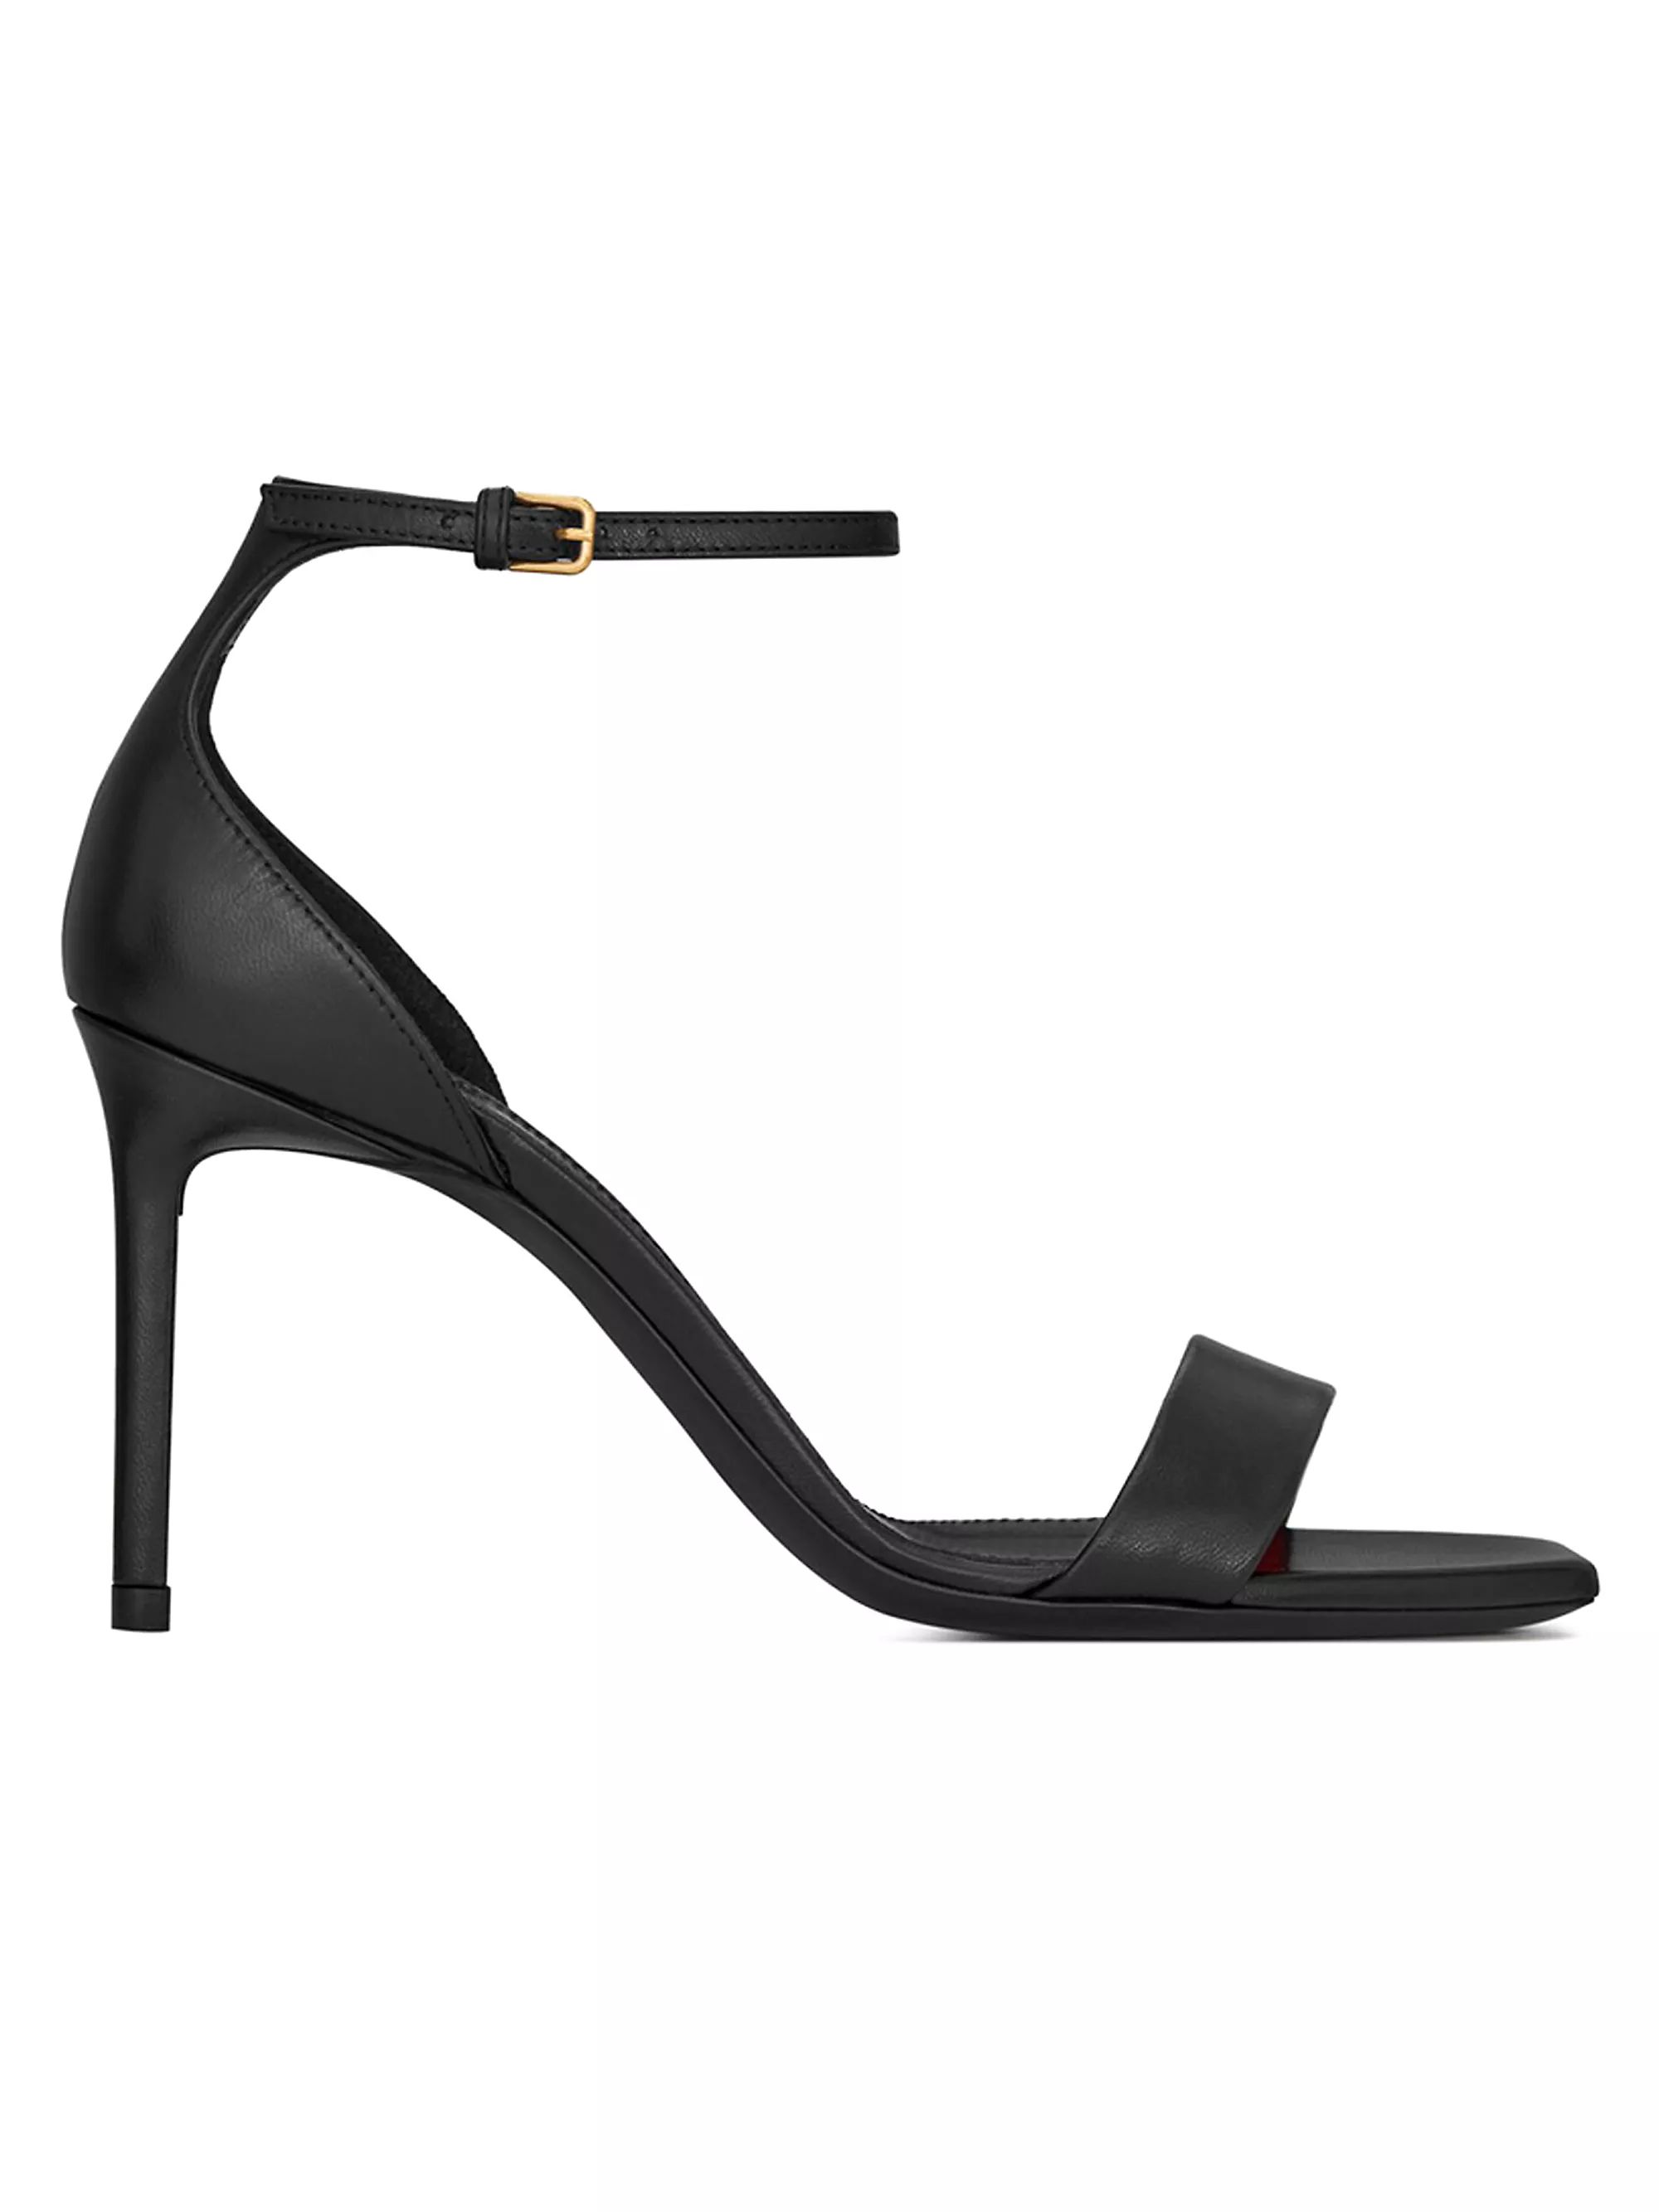 Shop Saint Laurent Amber Sandals in Leather | Saks Fifth Avenue | Saks Fifth Avenue